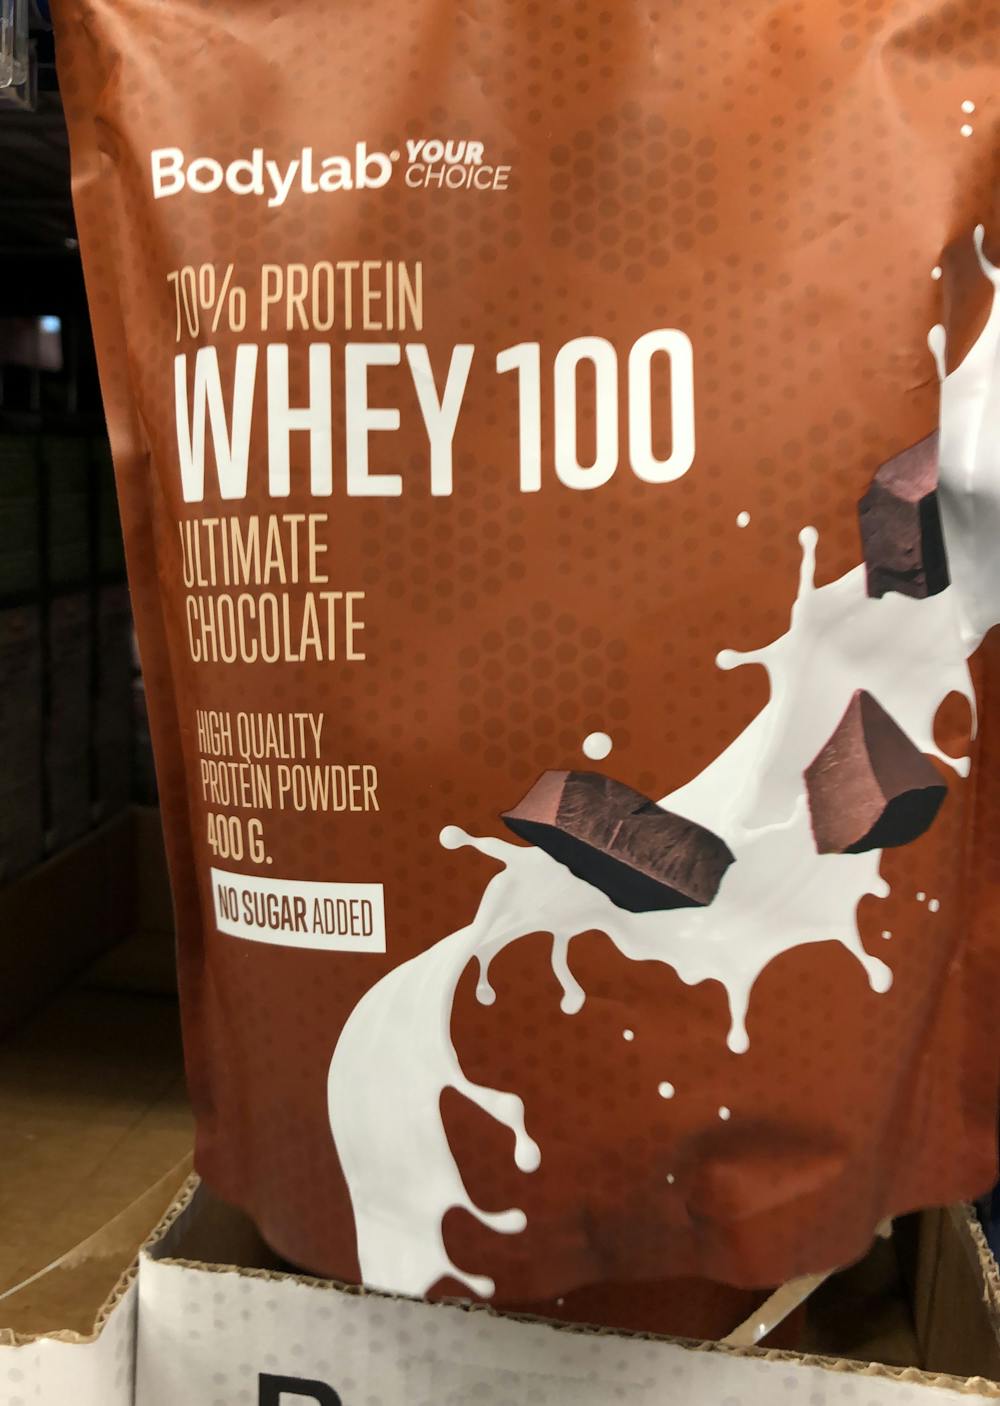 Whey 100, ultimate chocolate, Bodylab